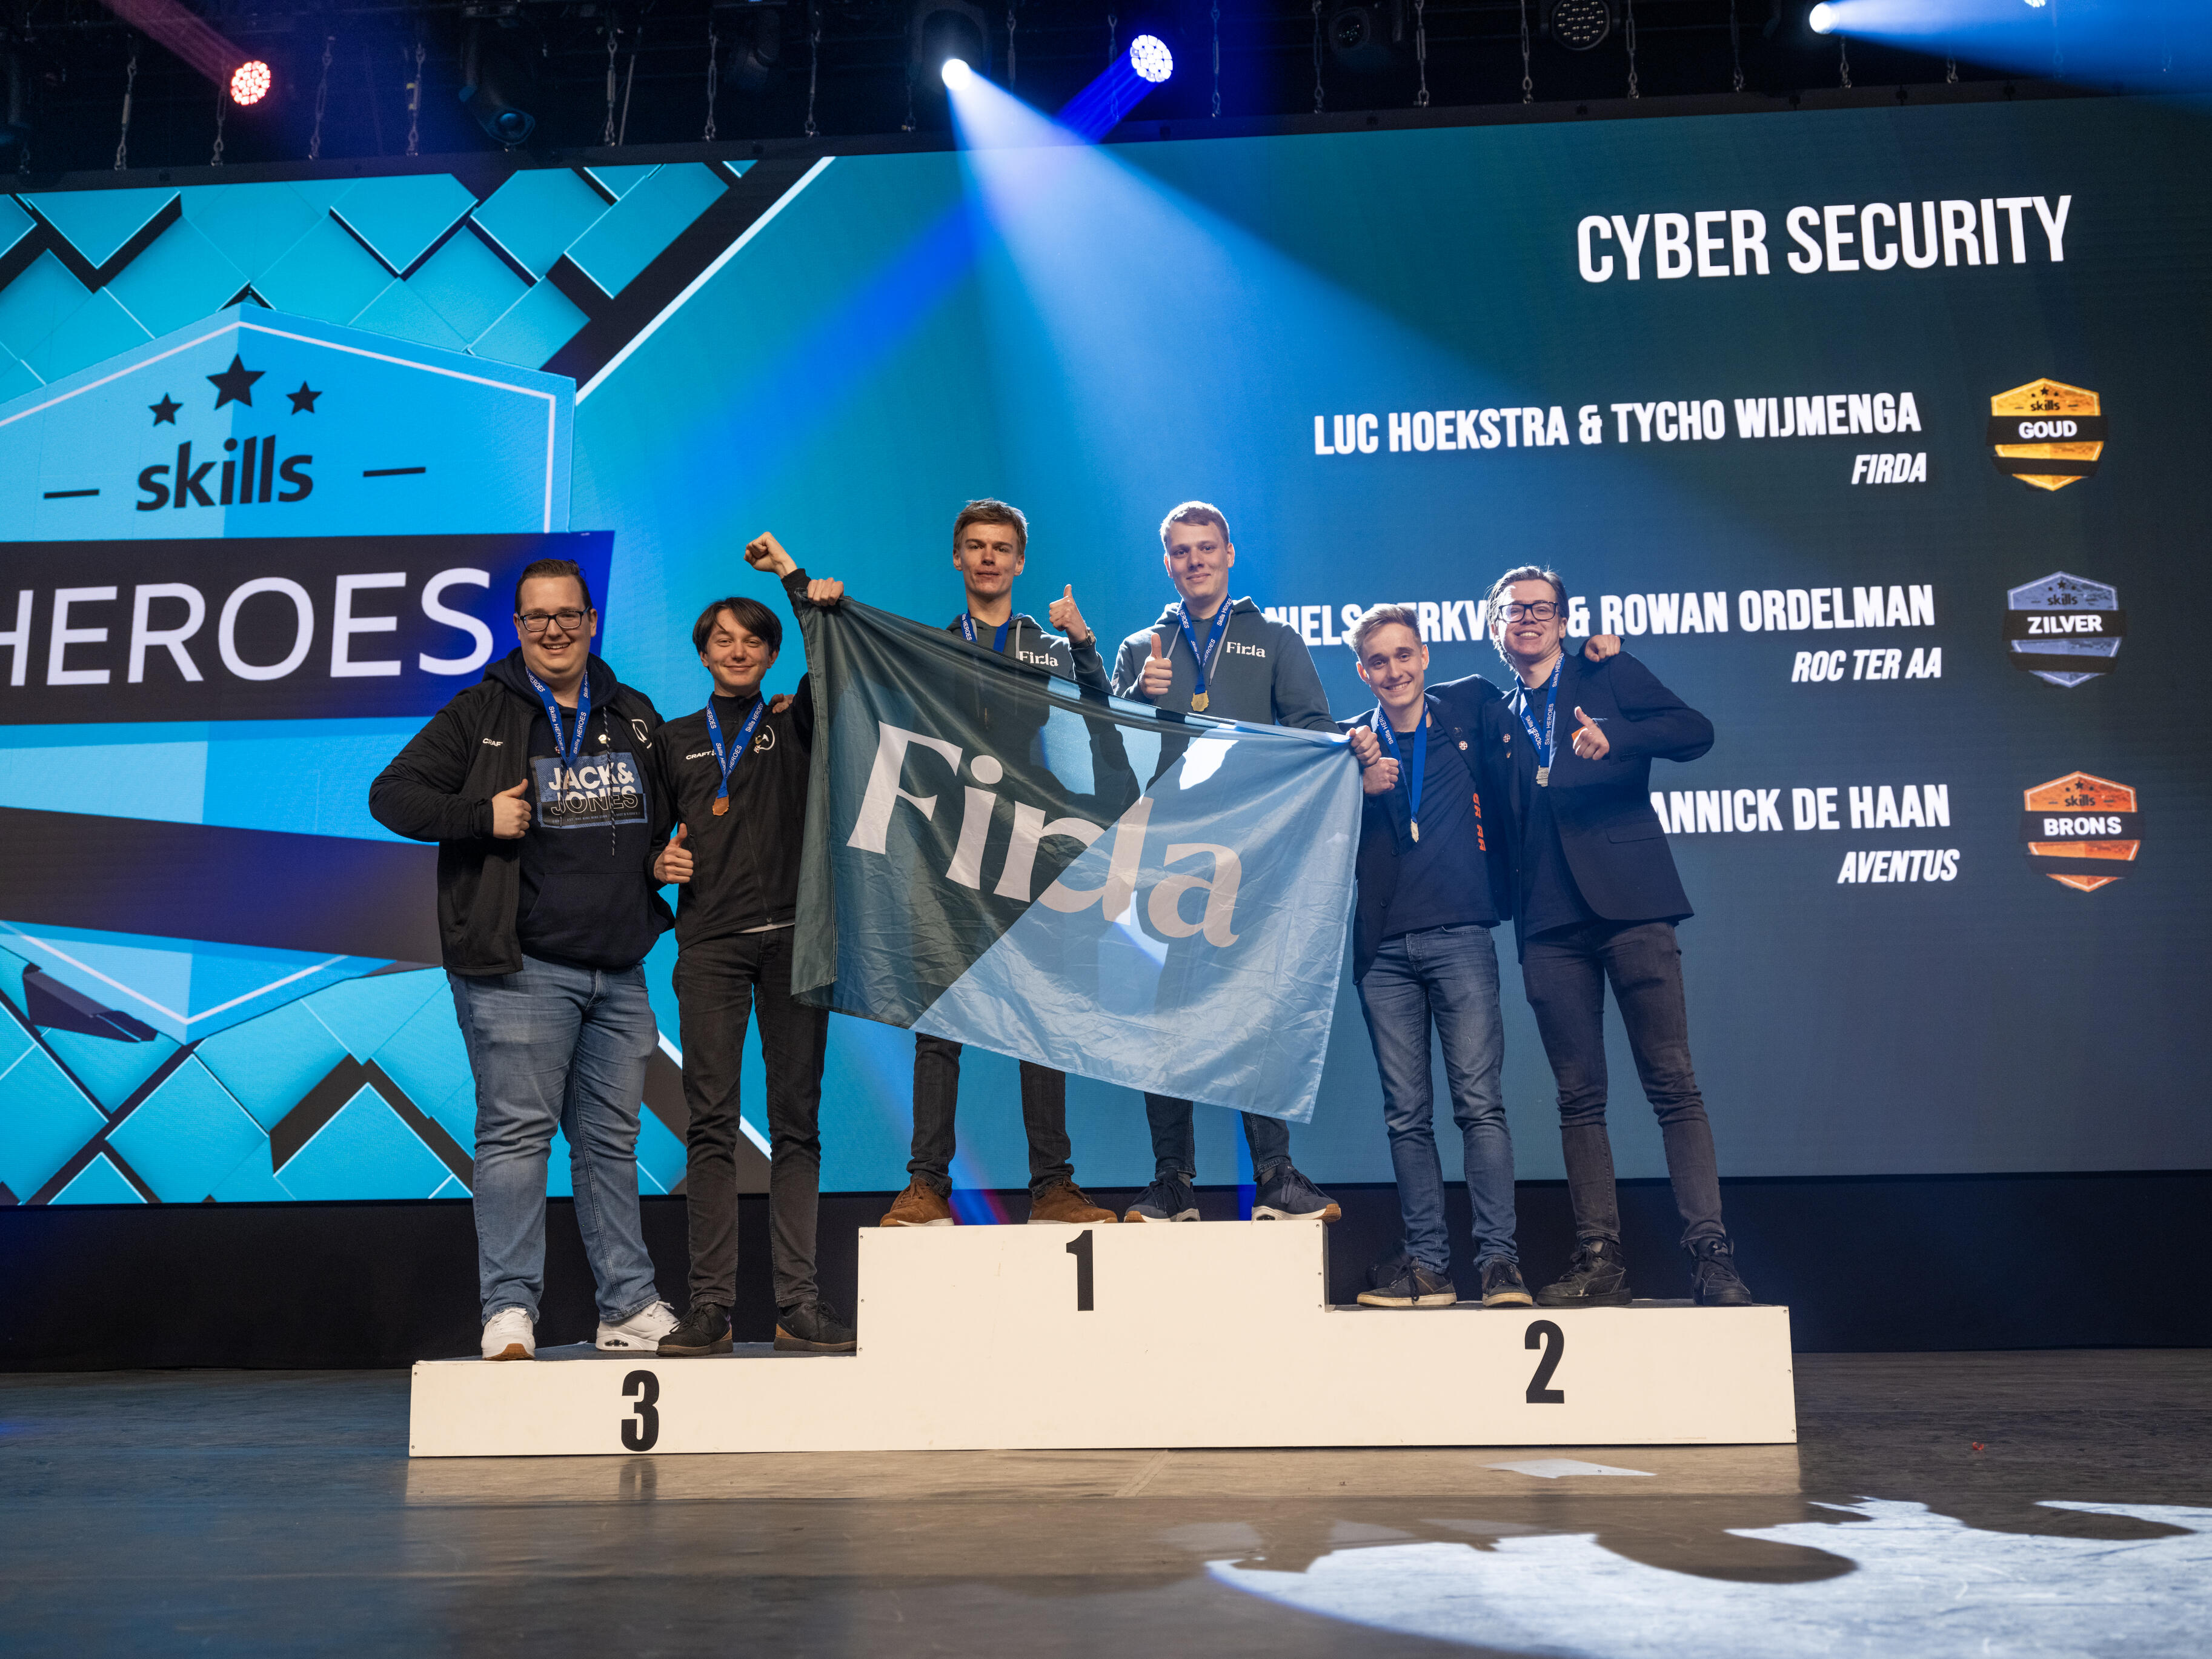 Jens Steensma & Yannick de Haan in de categorie Cyber security wonnen brons